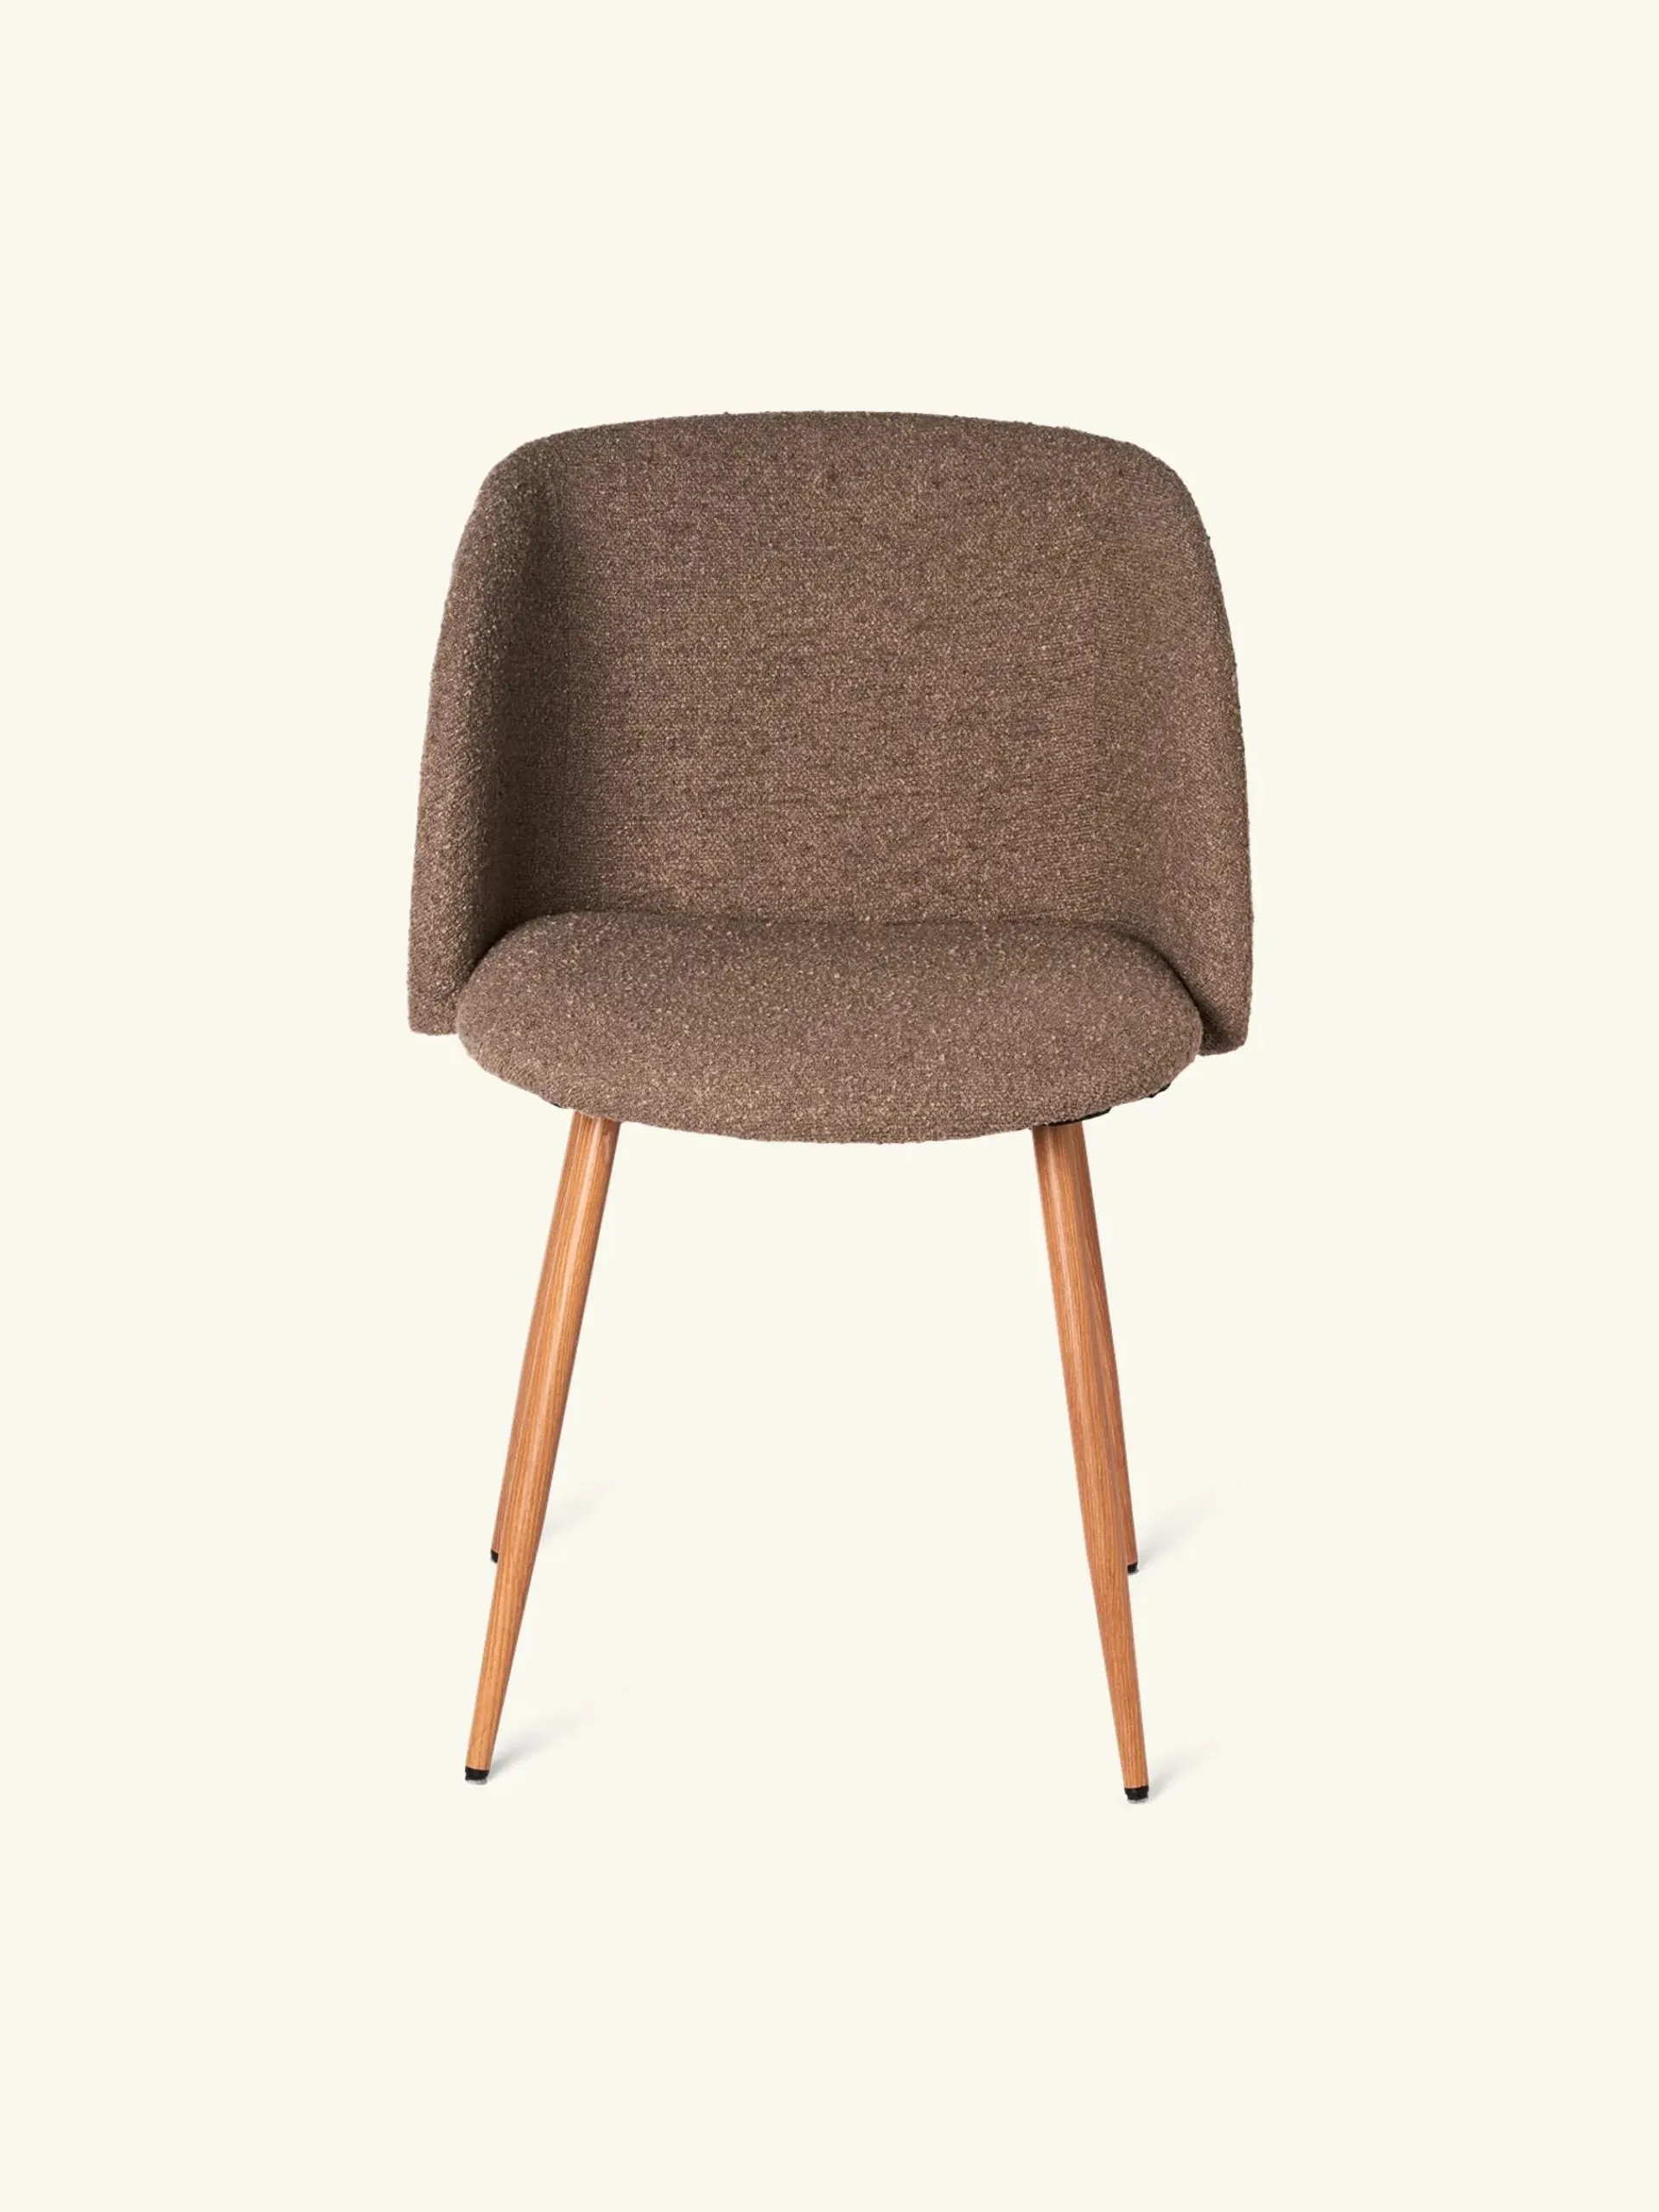 Chair with bouclé fabric